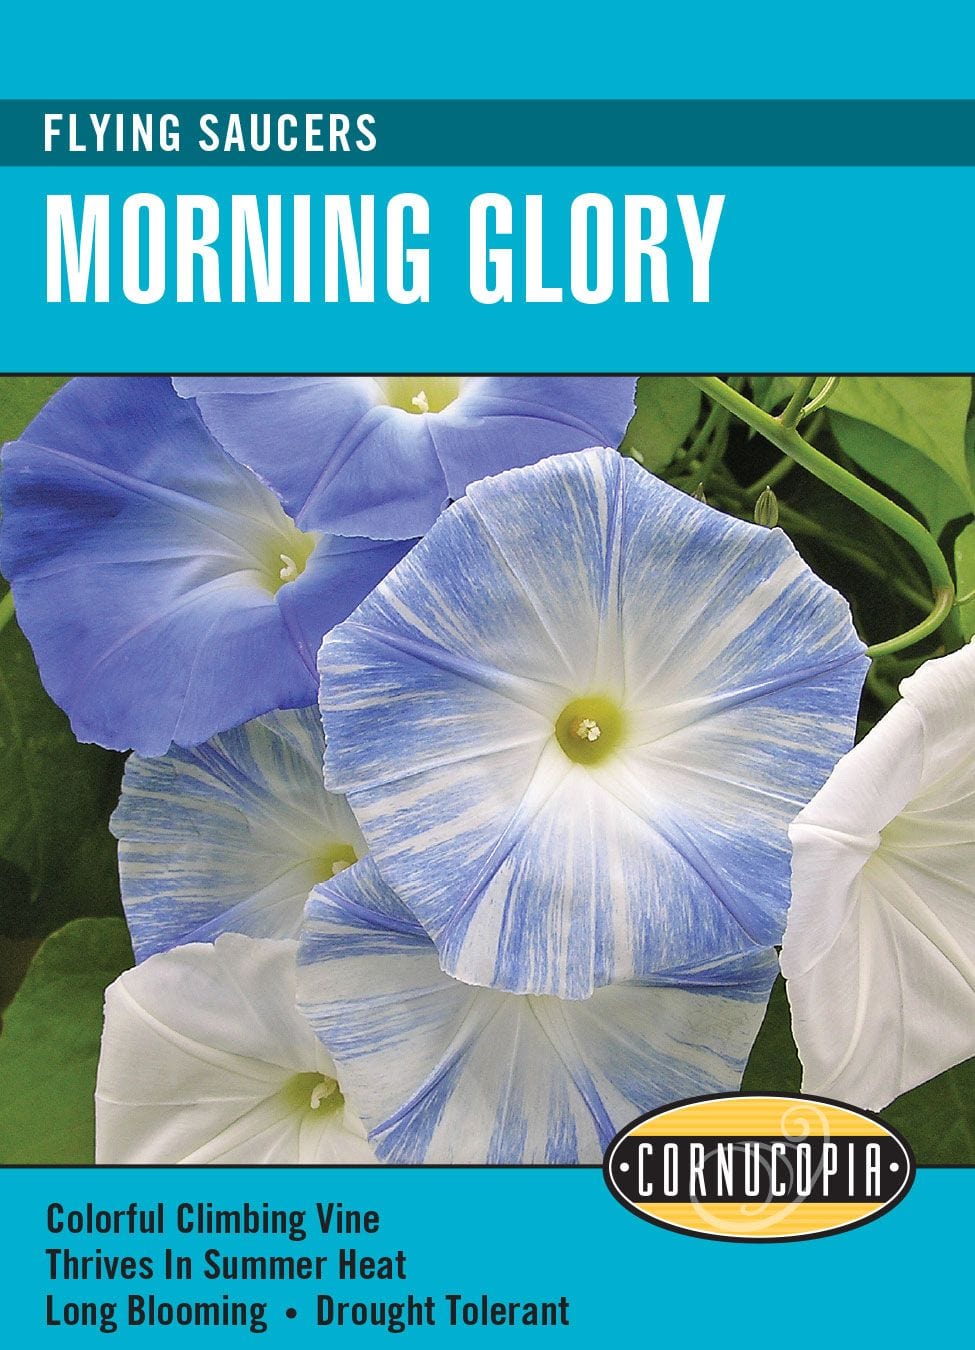 Morning Glory Flying Saucers - Cornucopia Seeds